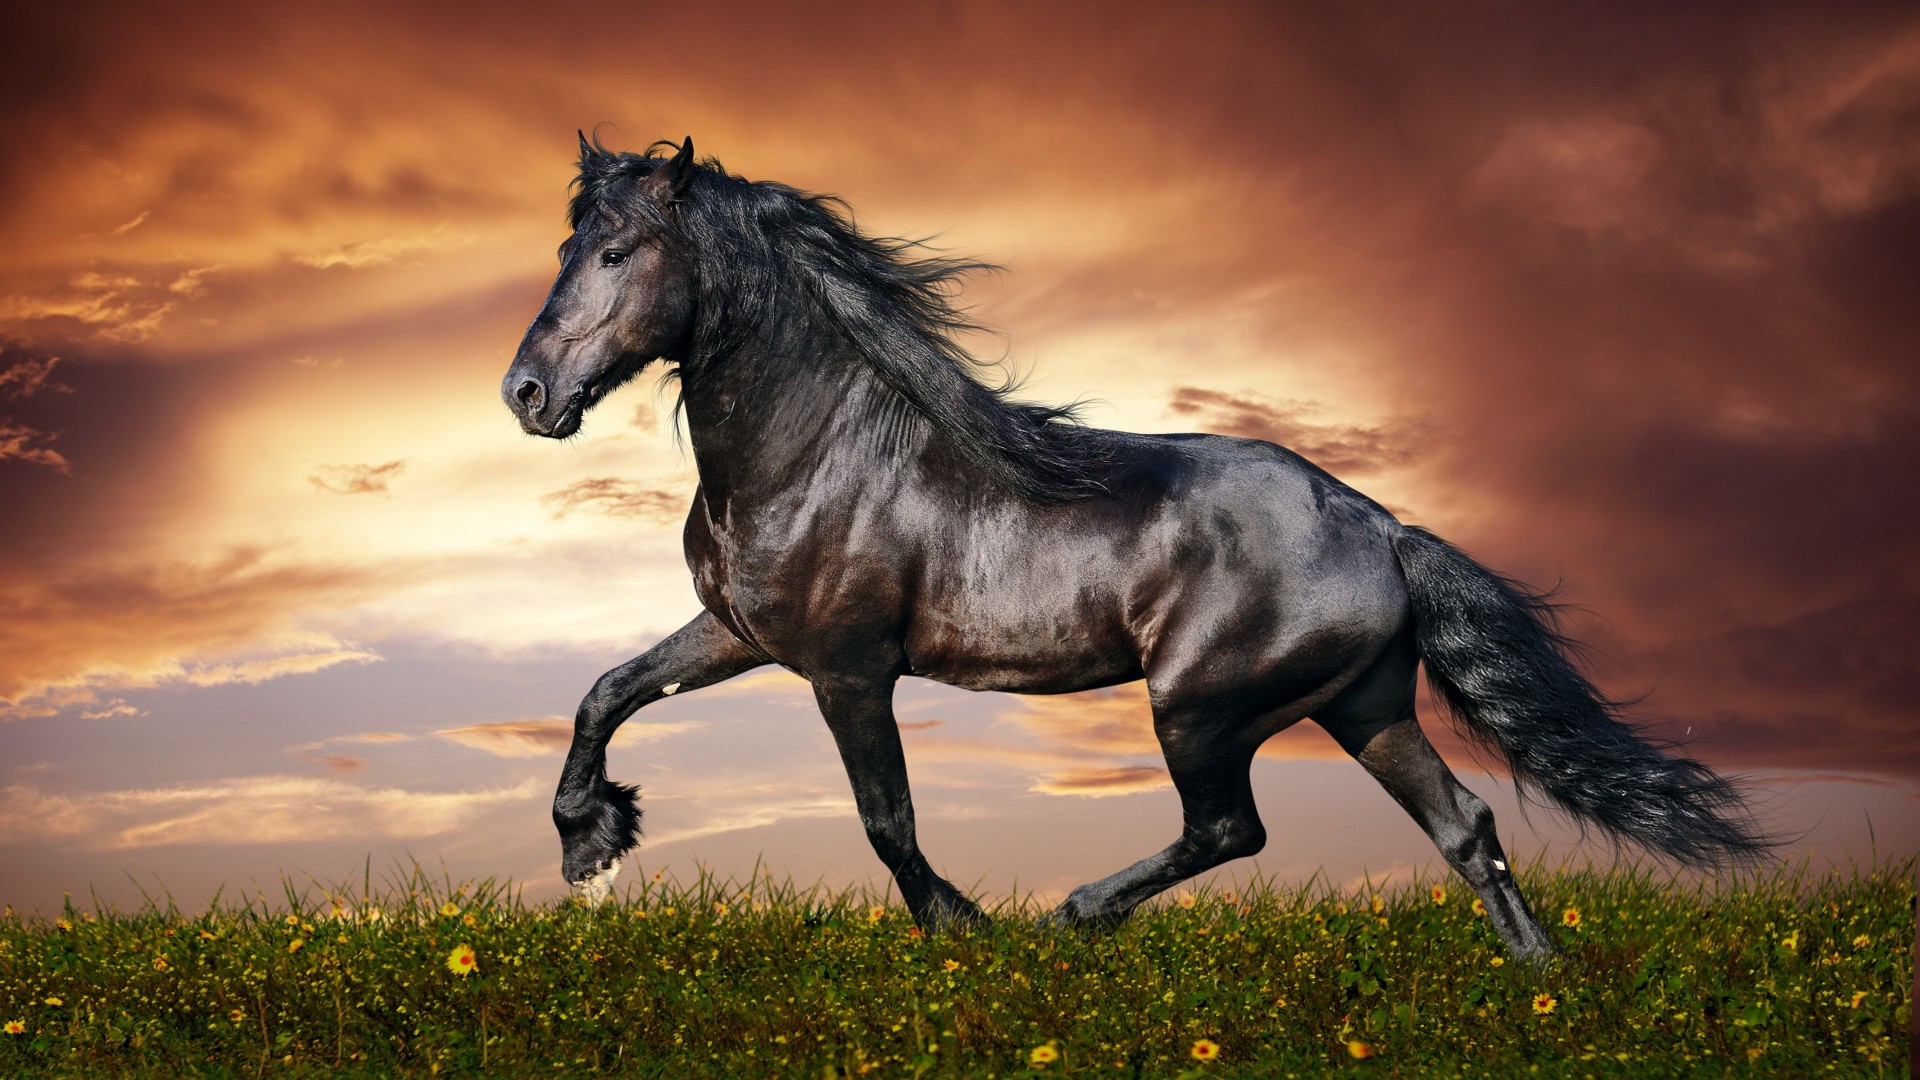 horse, 5k, 4k wallpaper, hooves, mane, galloping, black, sunset, green grass, sky, clouds (horizontal)